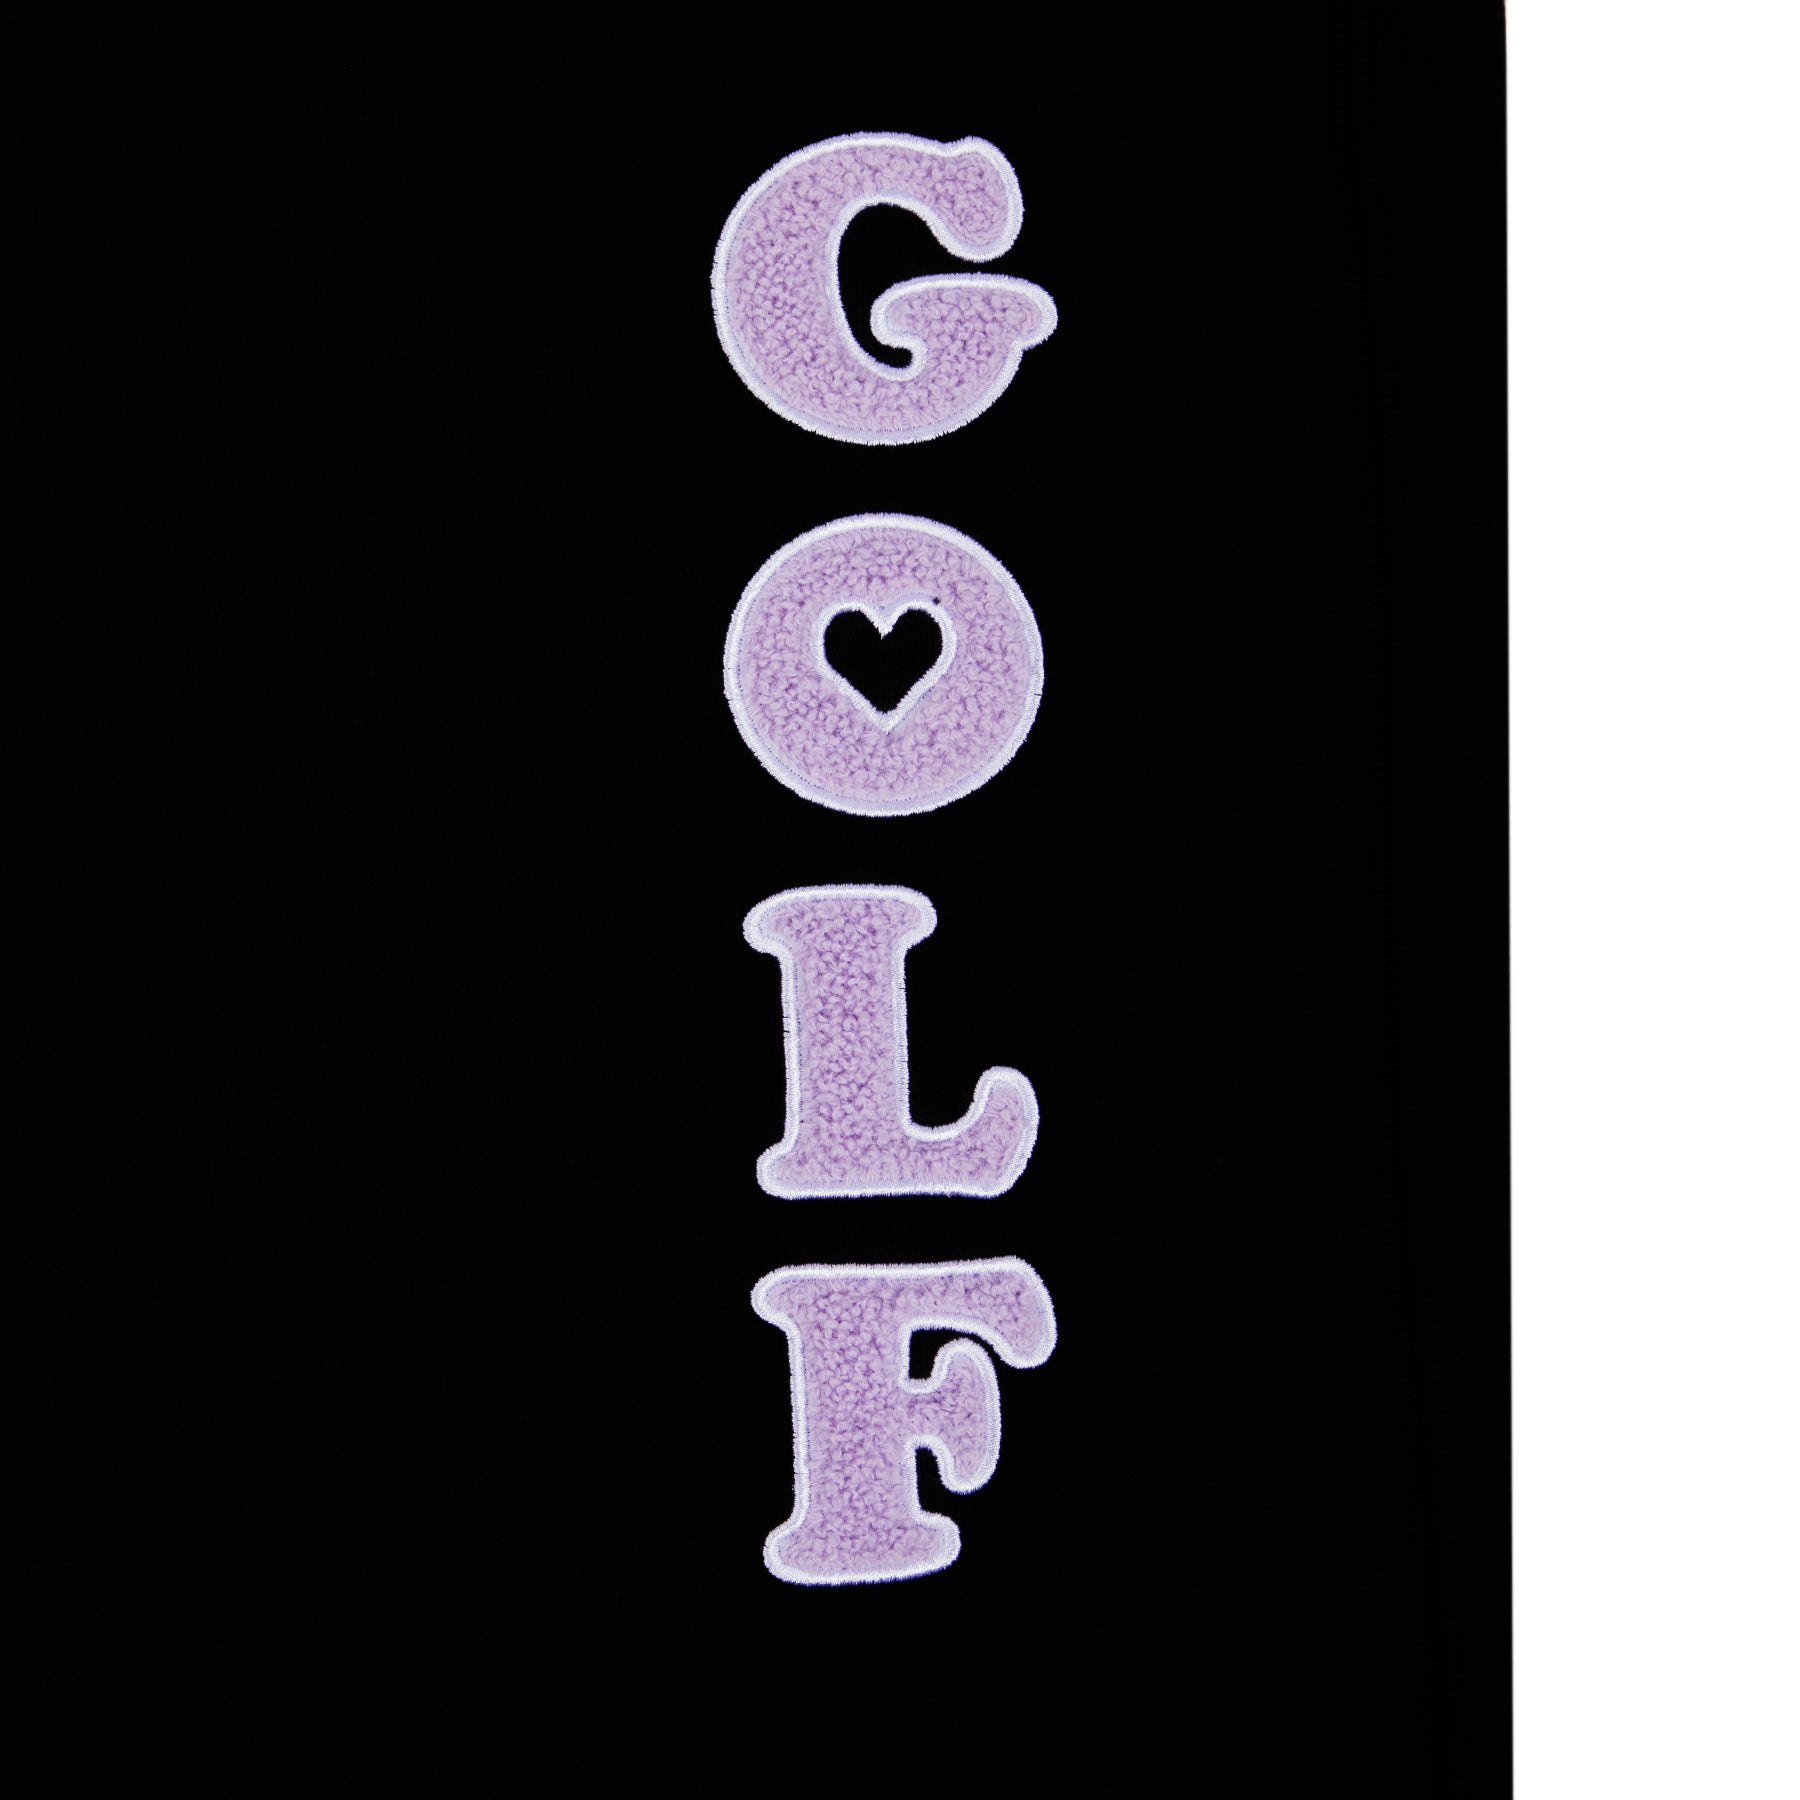 THE FEELING SWEATPANT by GOLF WANG – Golf Wang